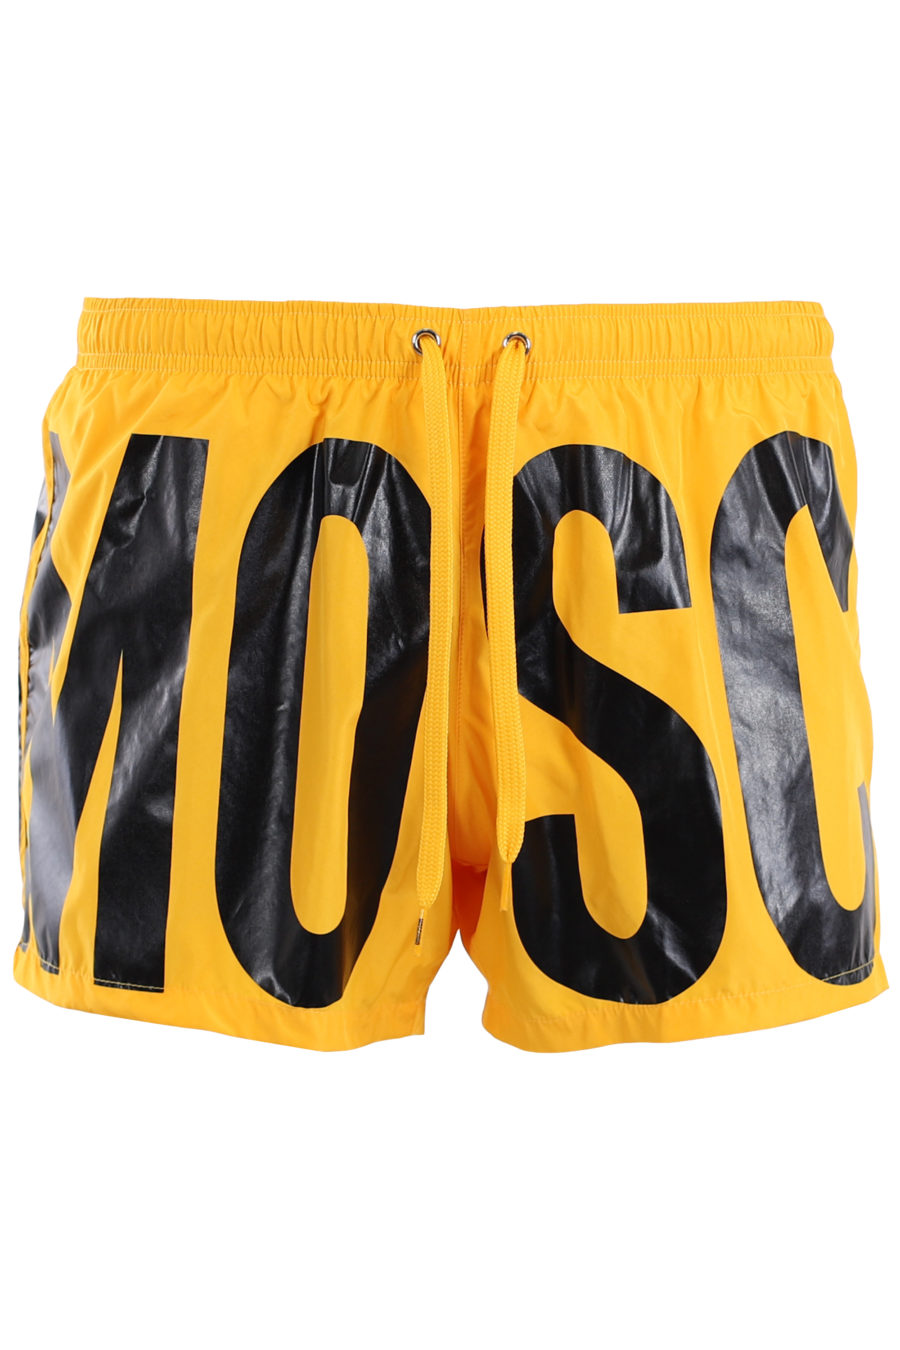 Yellow swimming costume with large black logo - IMG 9503